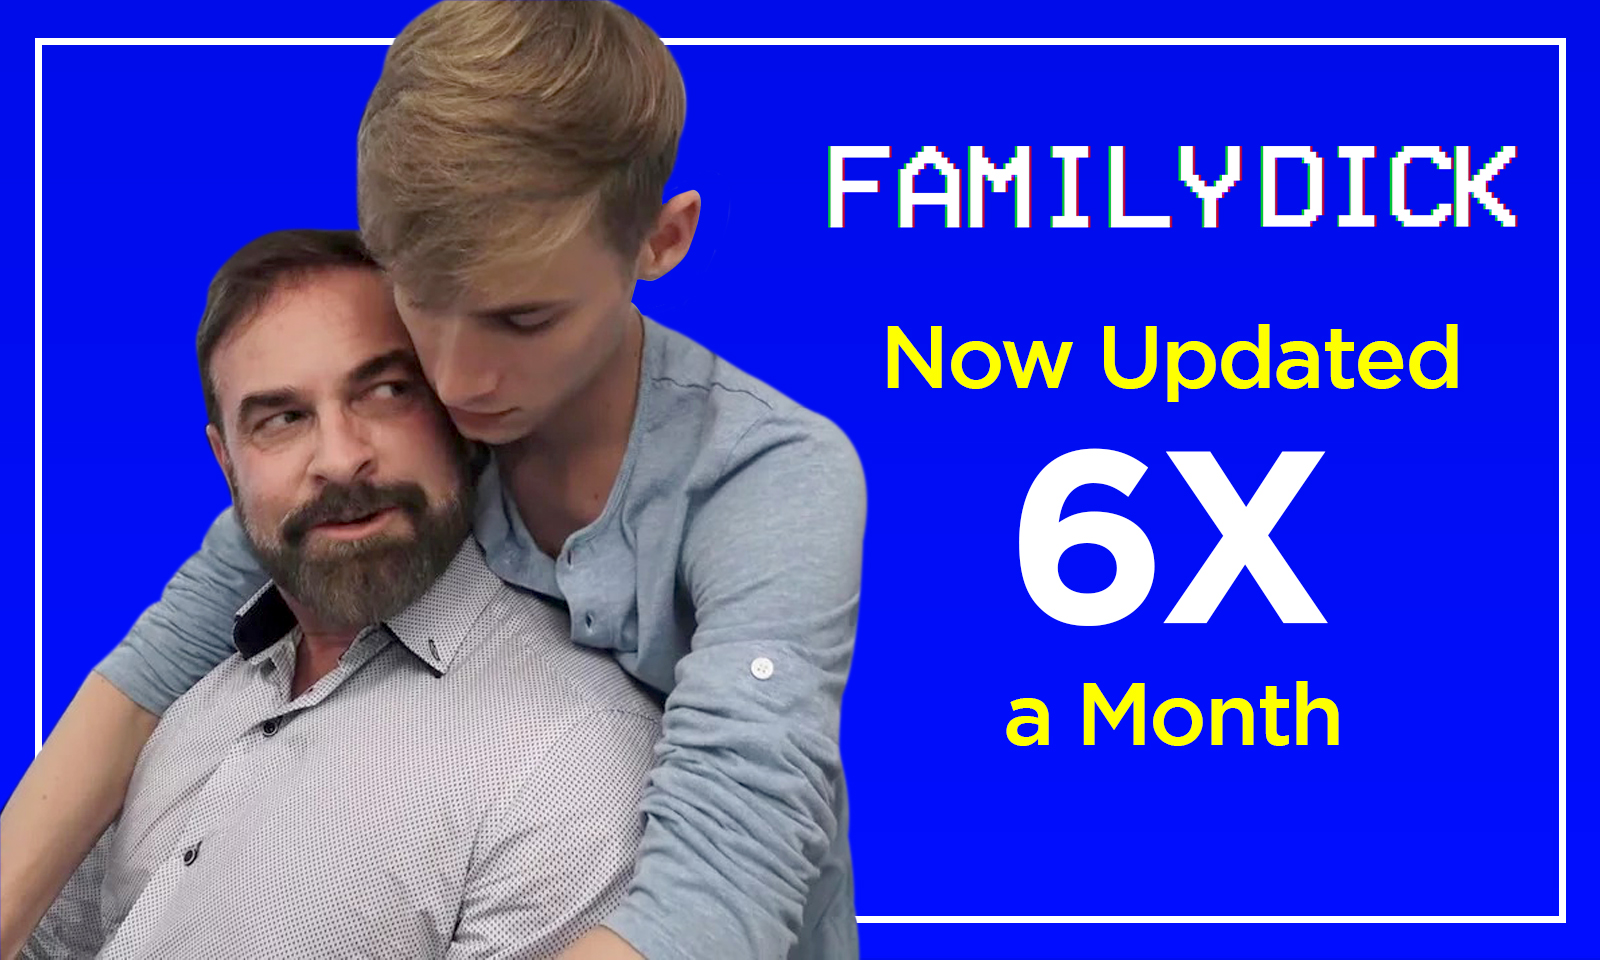 FamilyDick.com Updates its Unique Gay Content Six Times Per Month